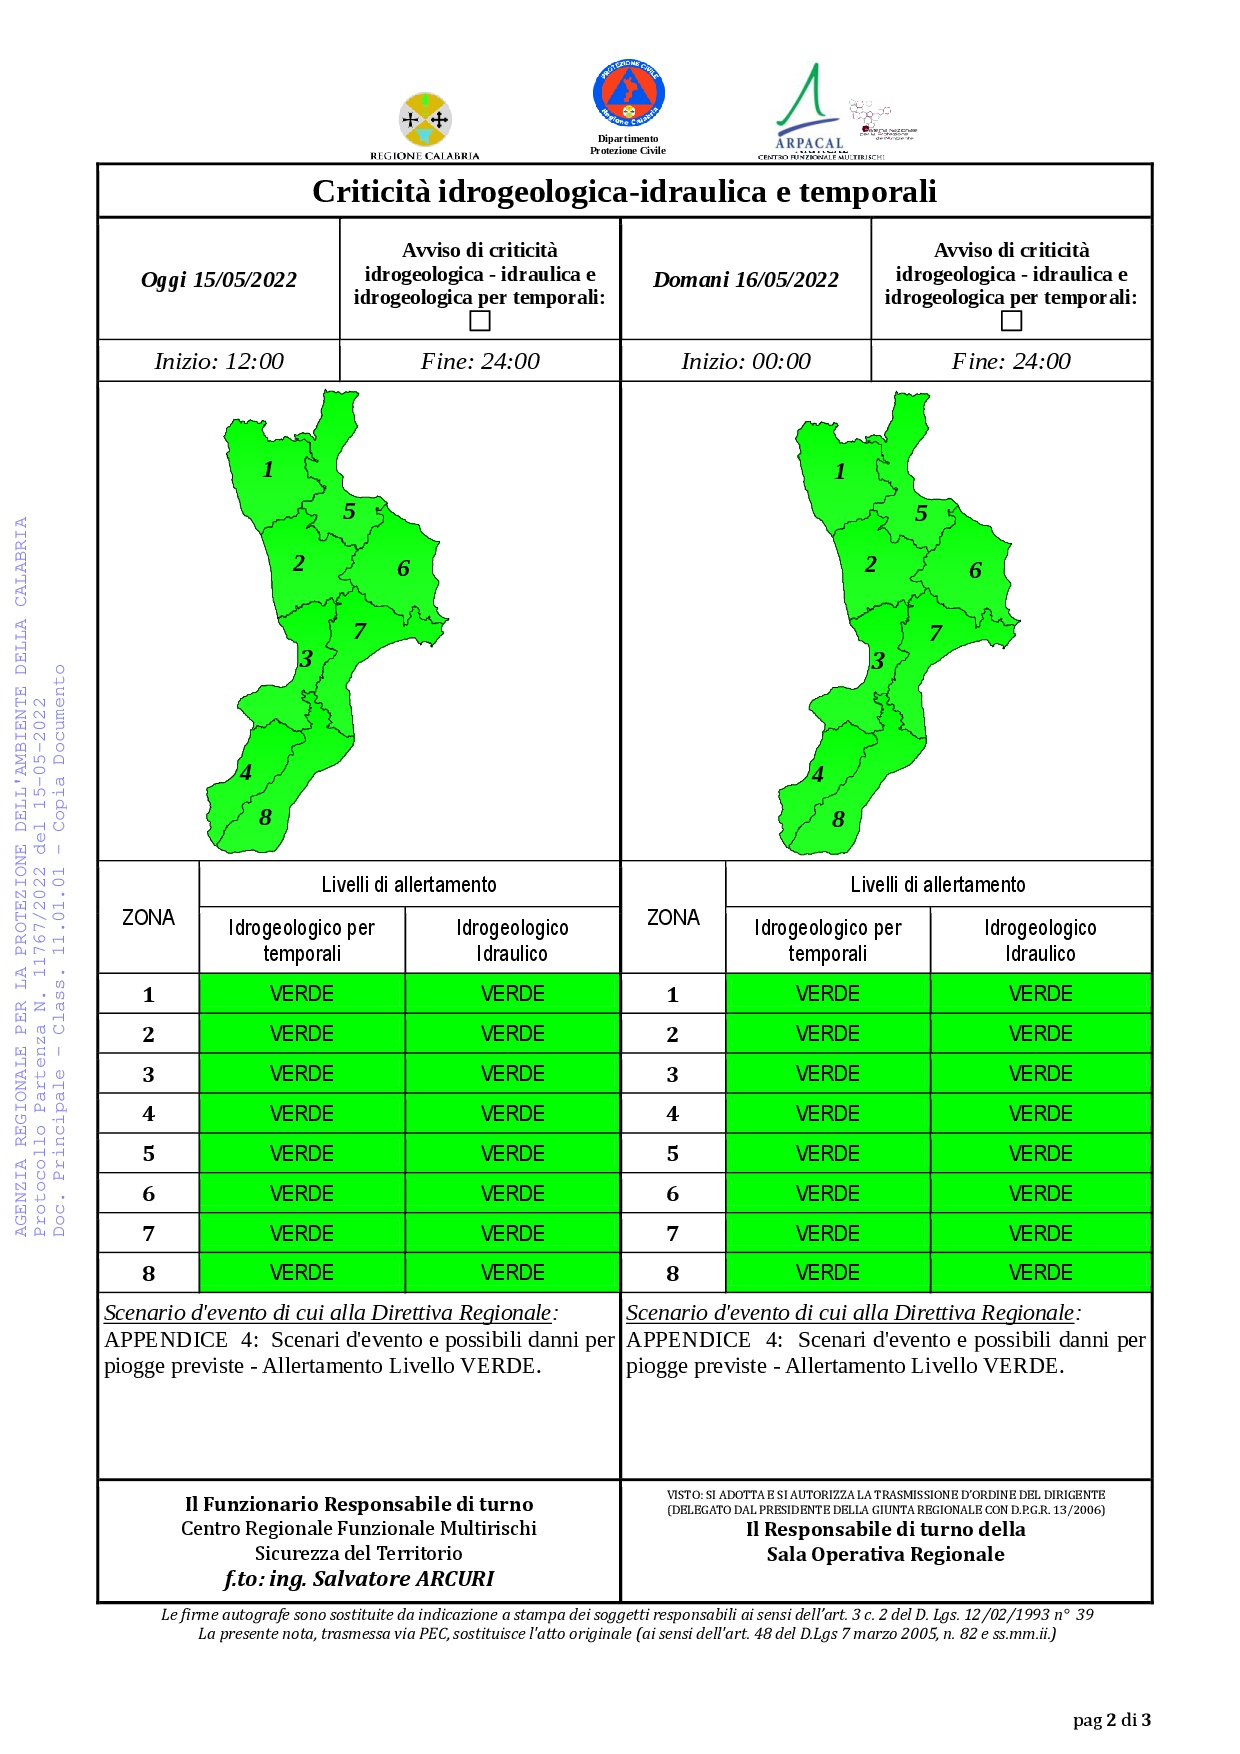 Criticità idrogeologica-idraulica e temporali in Calabria 15-05-2022